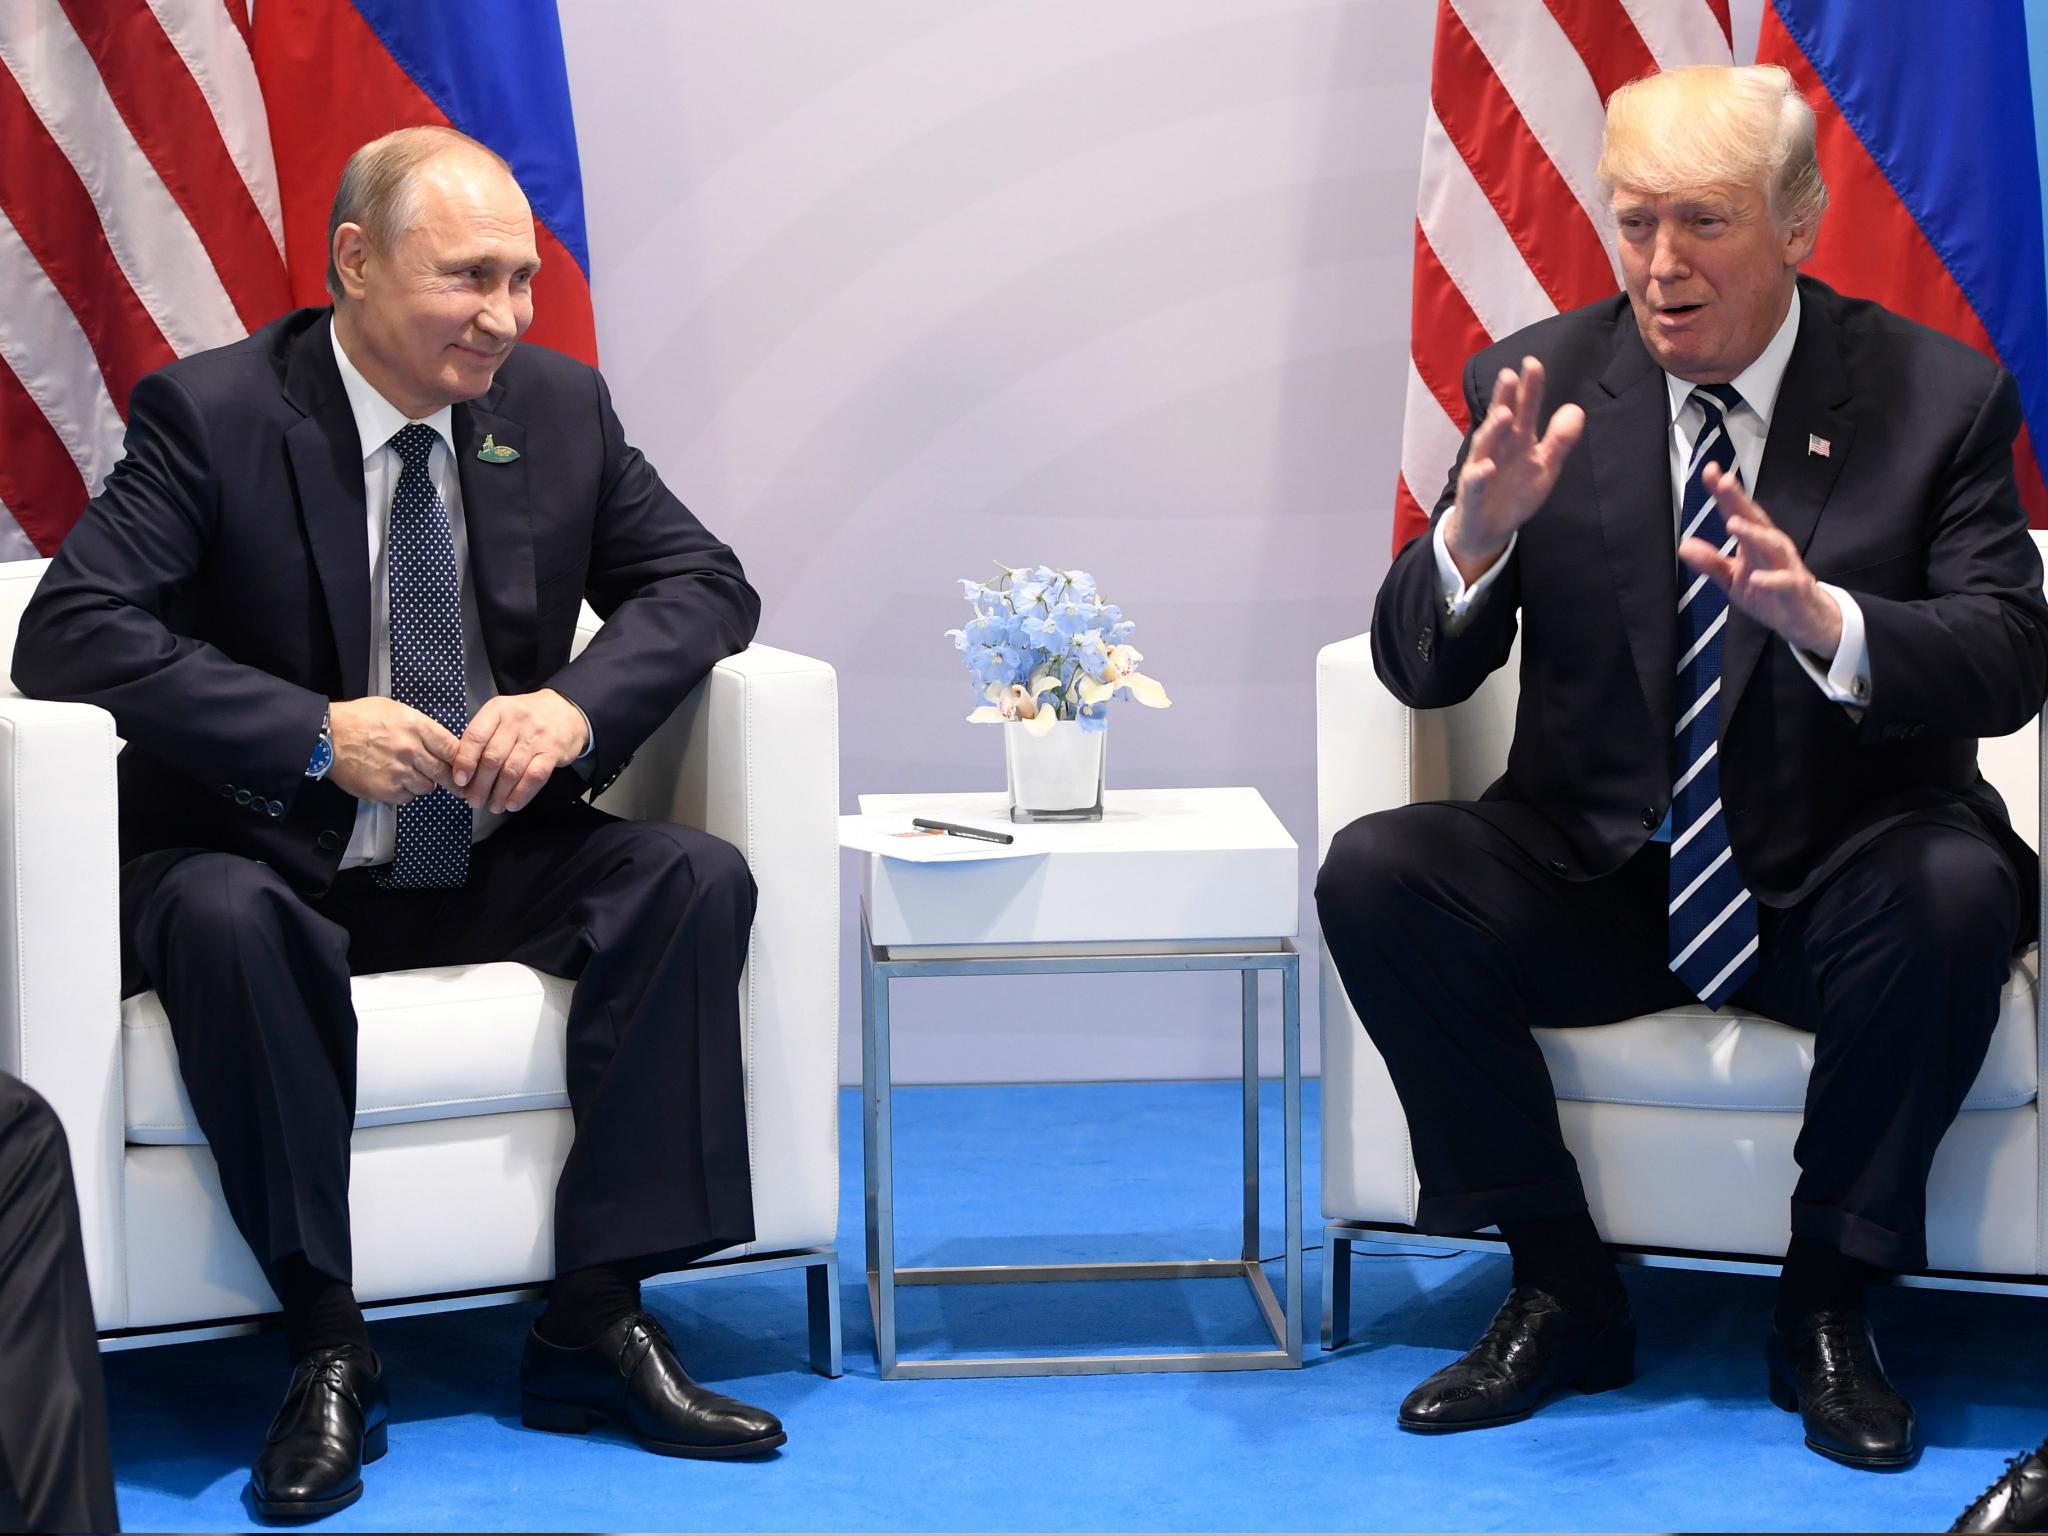 Russian President Vladimir Putin and Donald Trump meet in Hamburg, Germany at the G20 summit